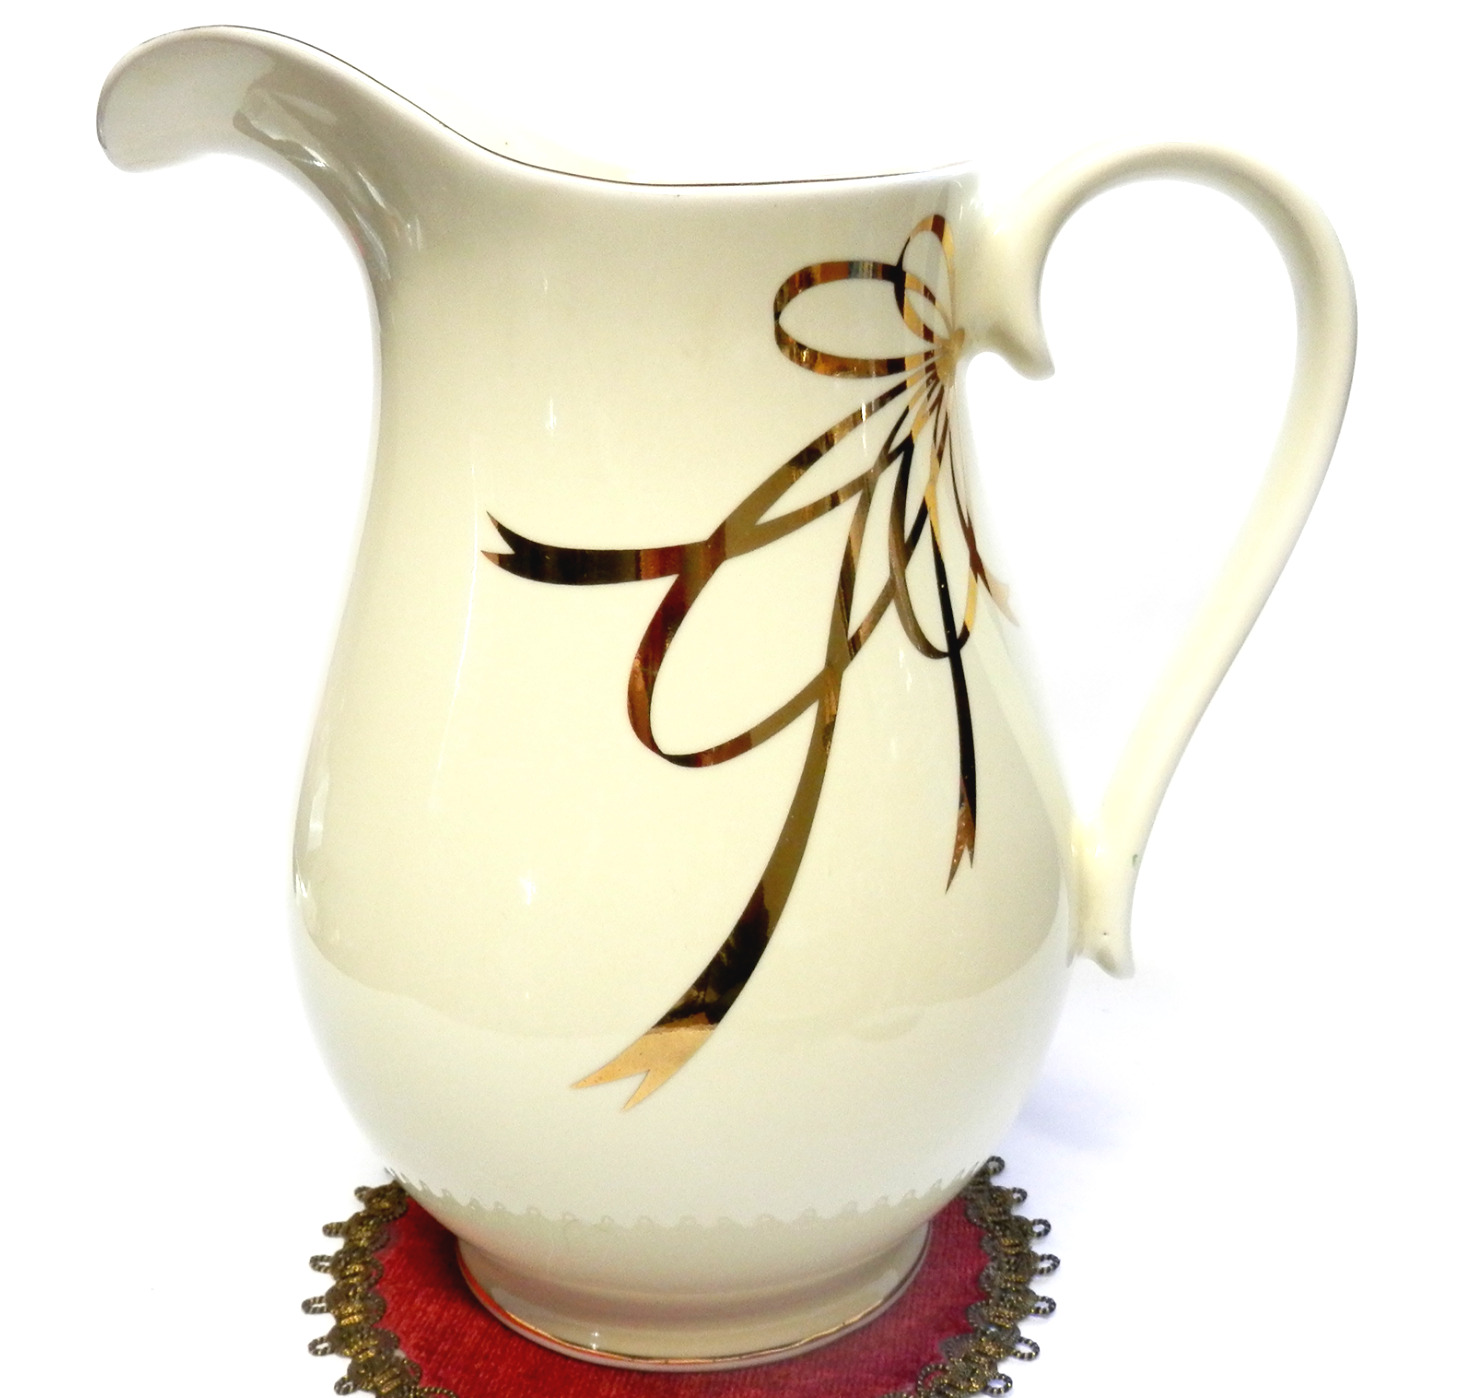 Vintage Teleflora Gift Pitcher Porcelain Ceramic with Gold Accents Quart 8